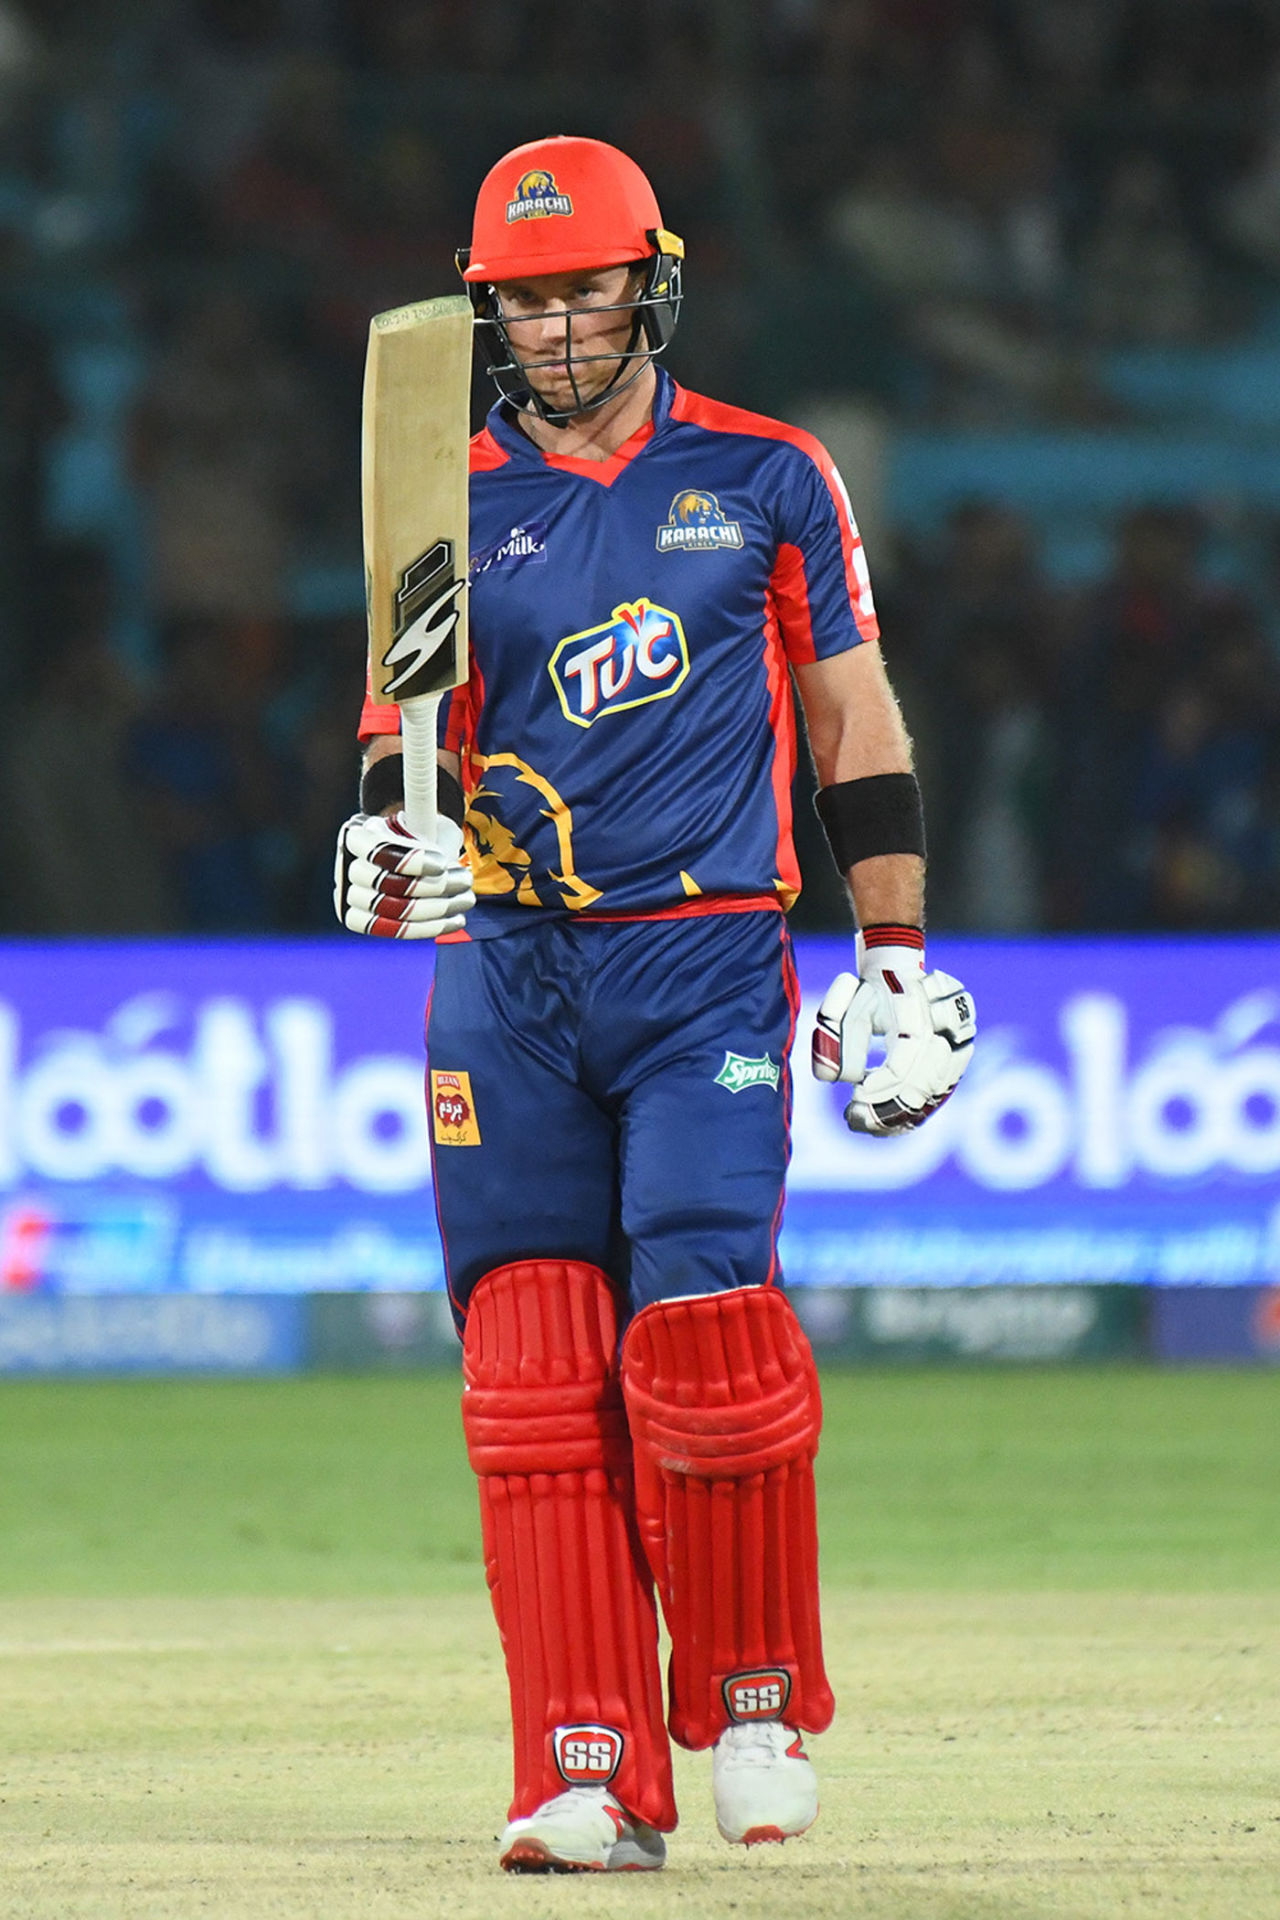 Colin Ingram raises his bat after getting to his half-century, Karachi Kings v Peshawar Zalmi, Karachi, March 11, 2019